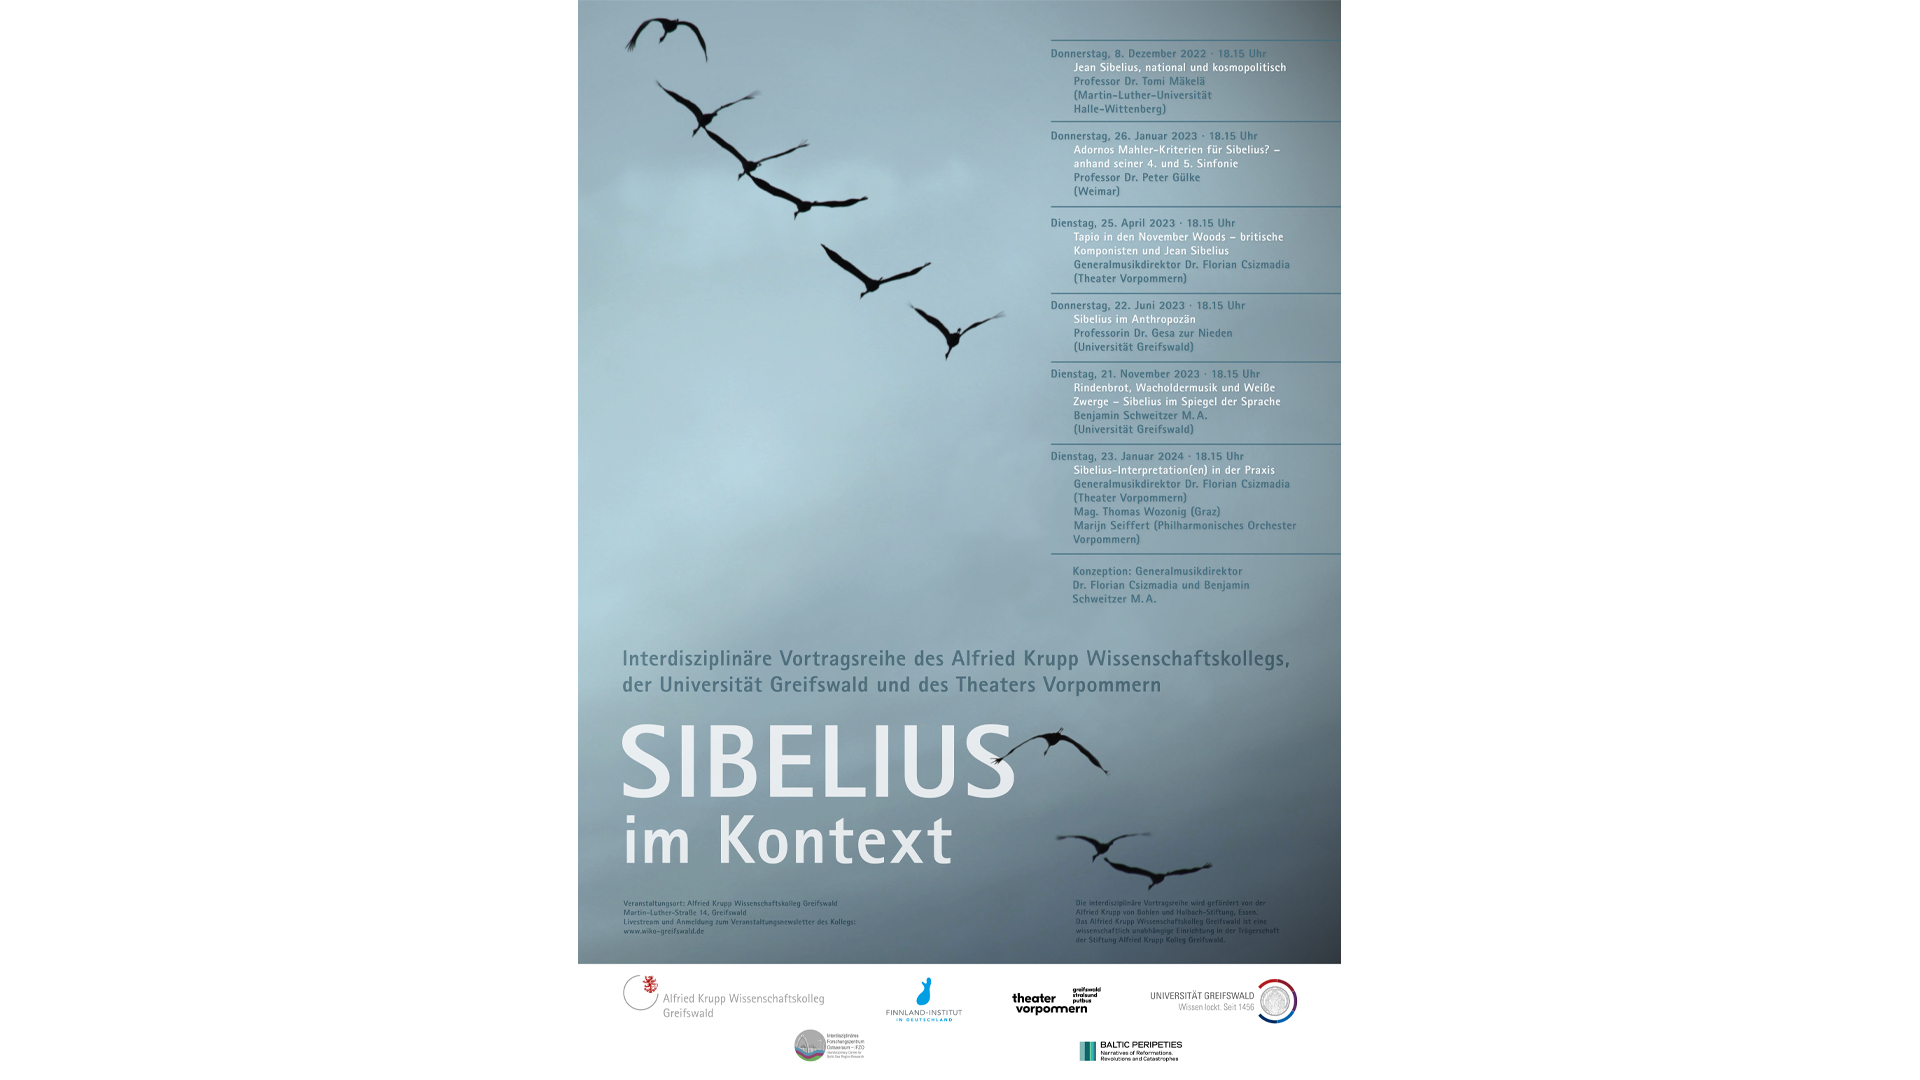 Sibelius-luentosarjan juliste